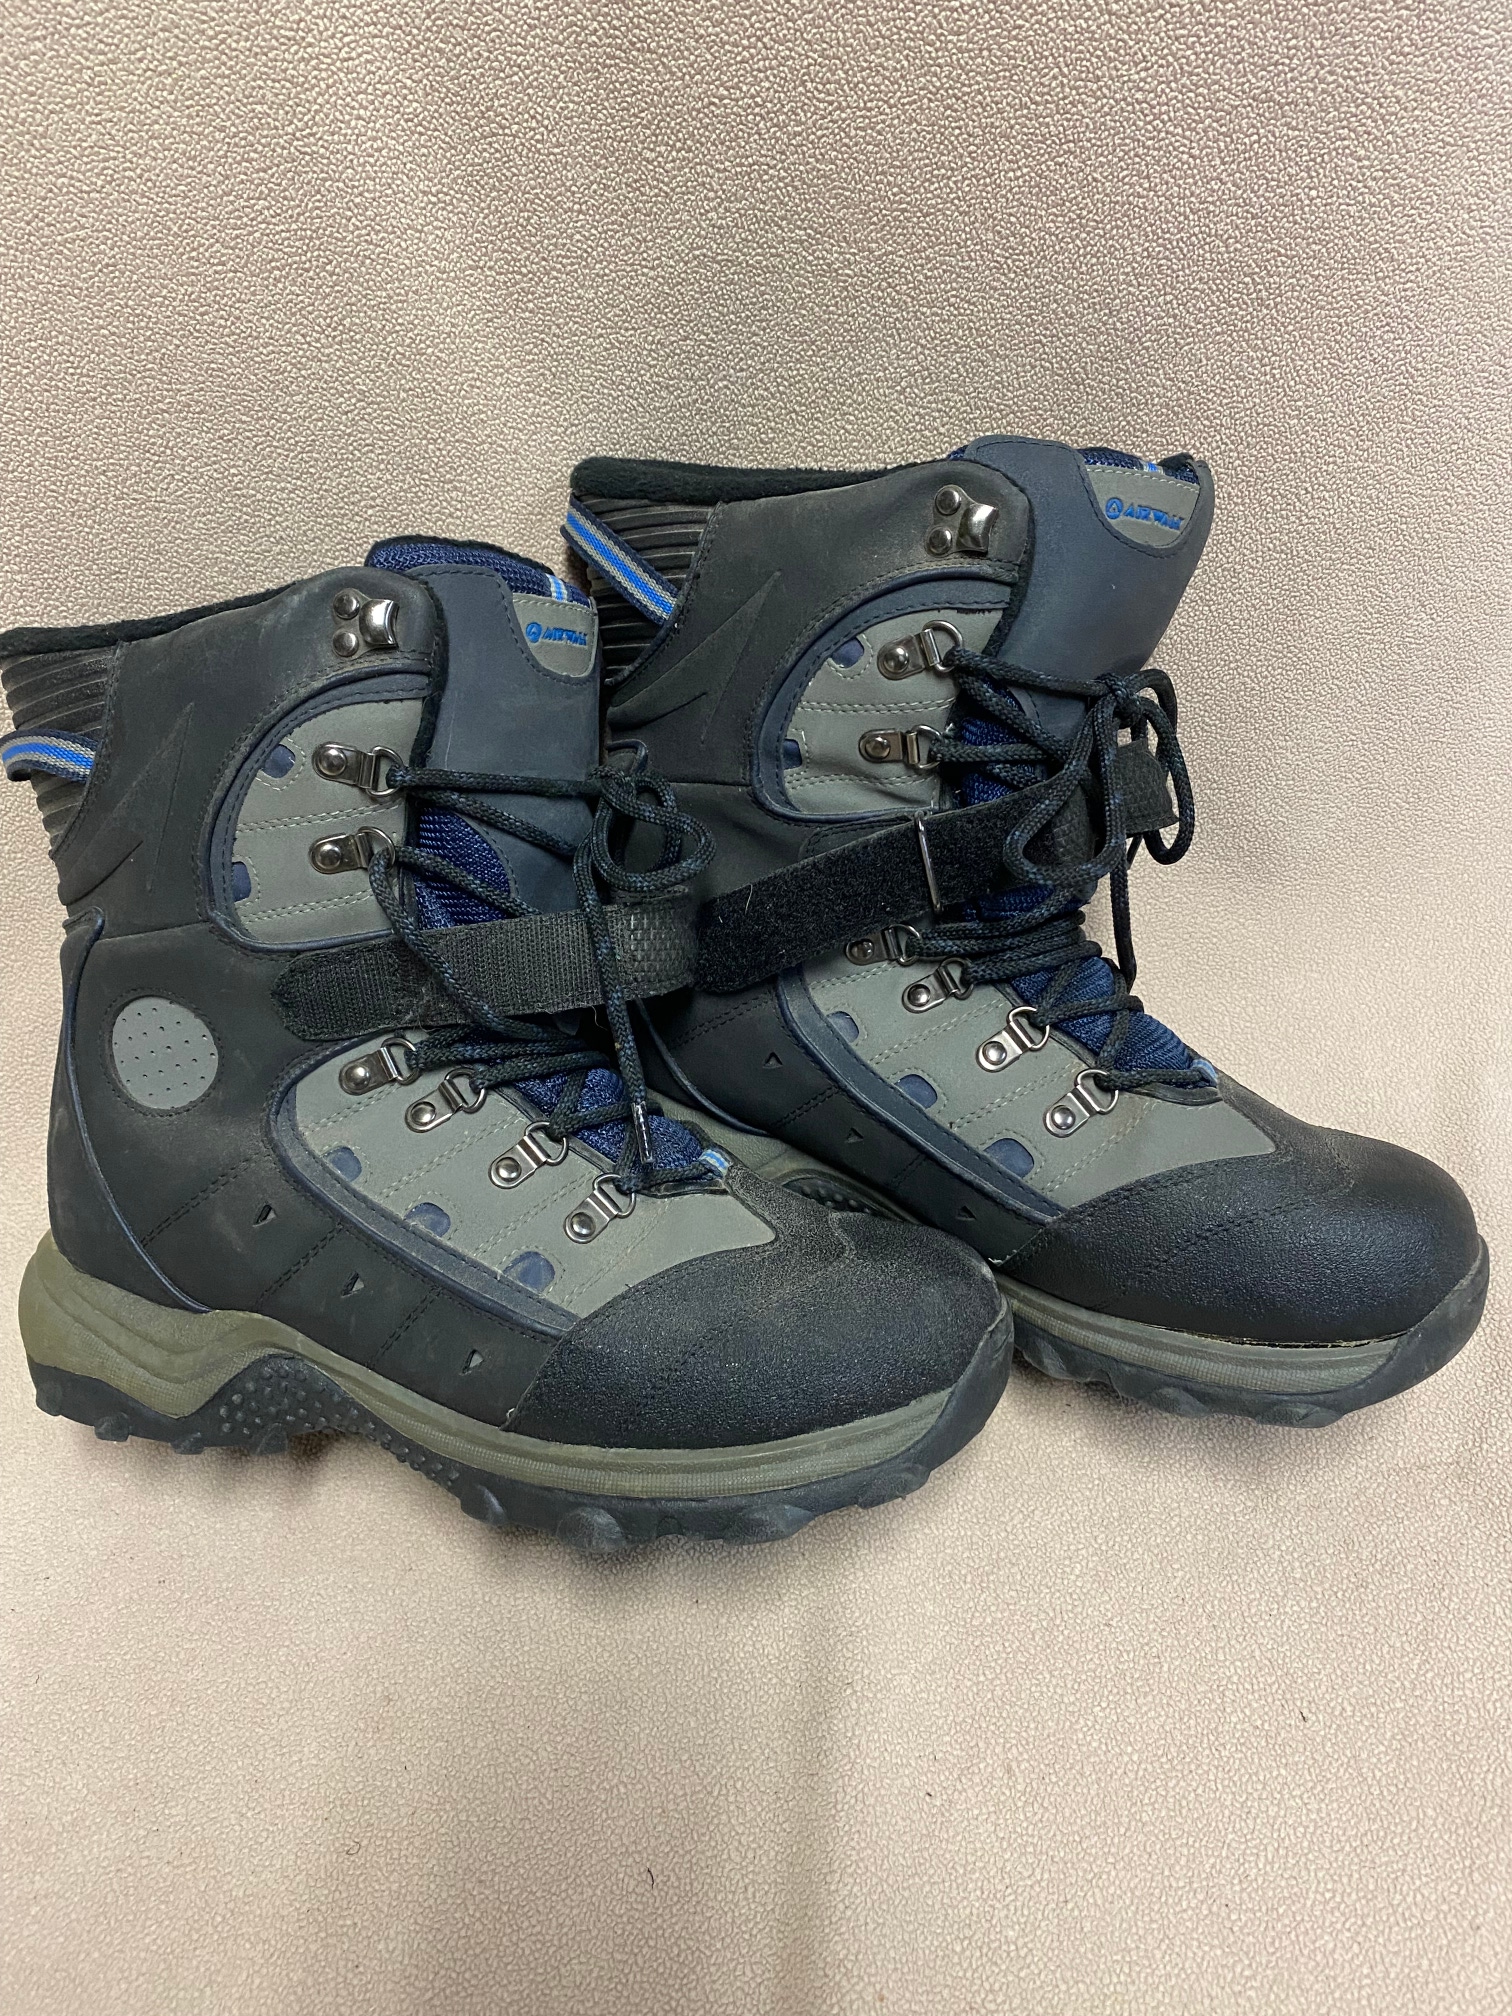 Men's Used Size 10 (Women's 11) Airwalk Snowboard Boots